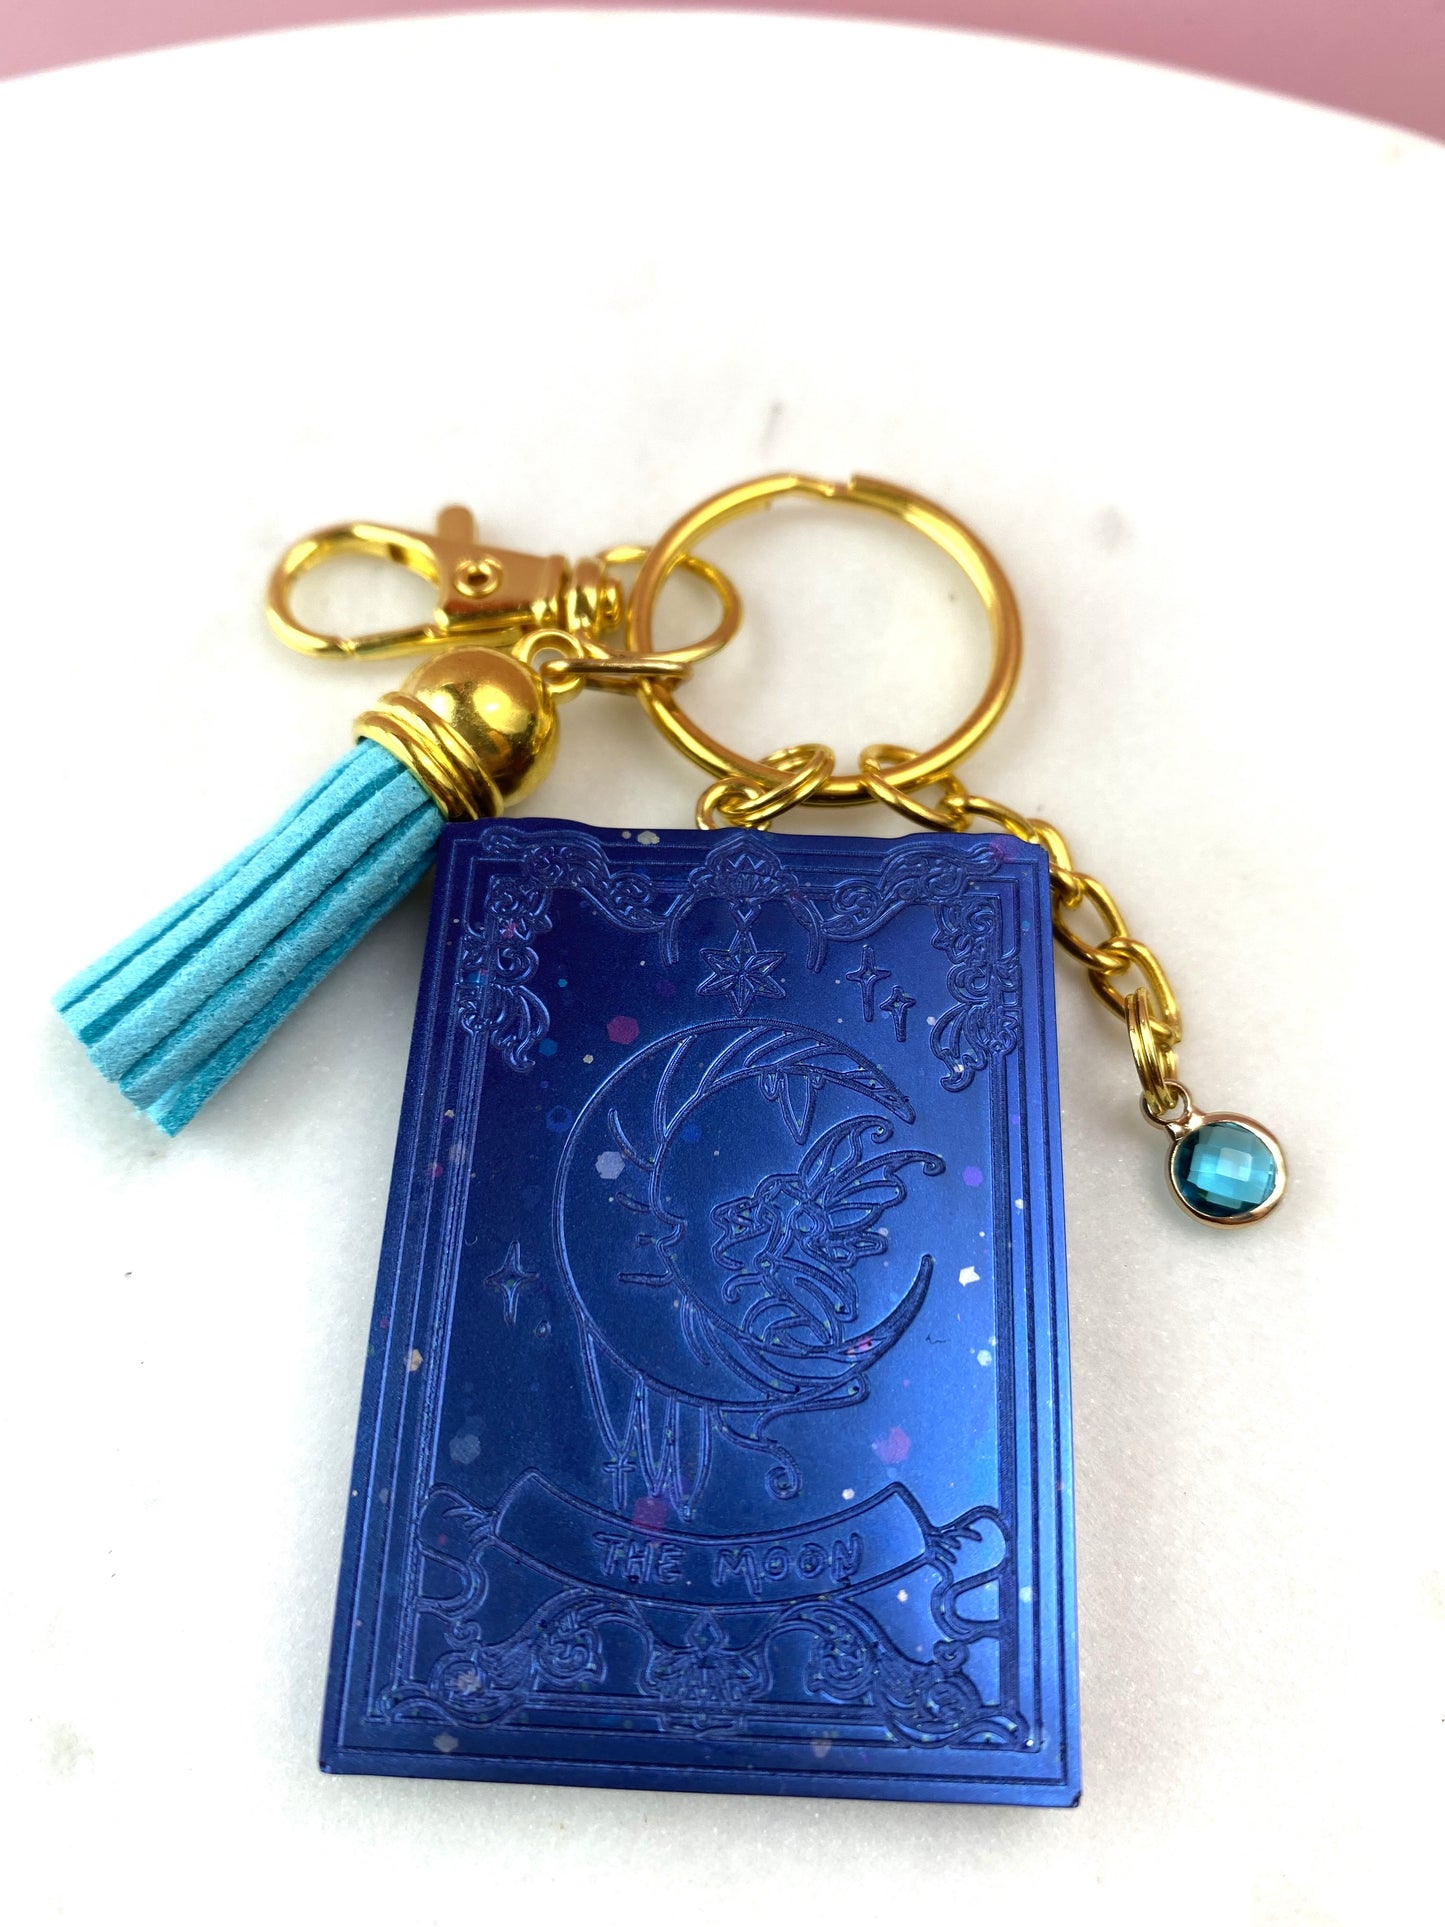 Tarot Card Keychain | The Moon | Handmade Accessories